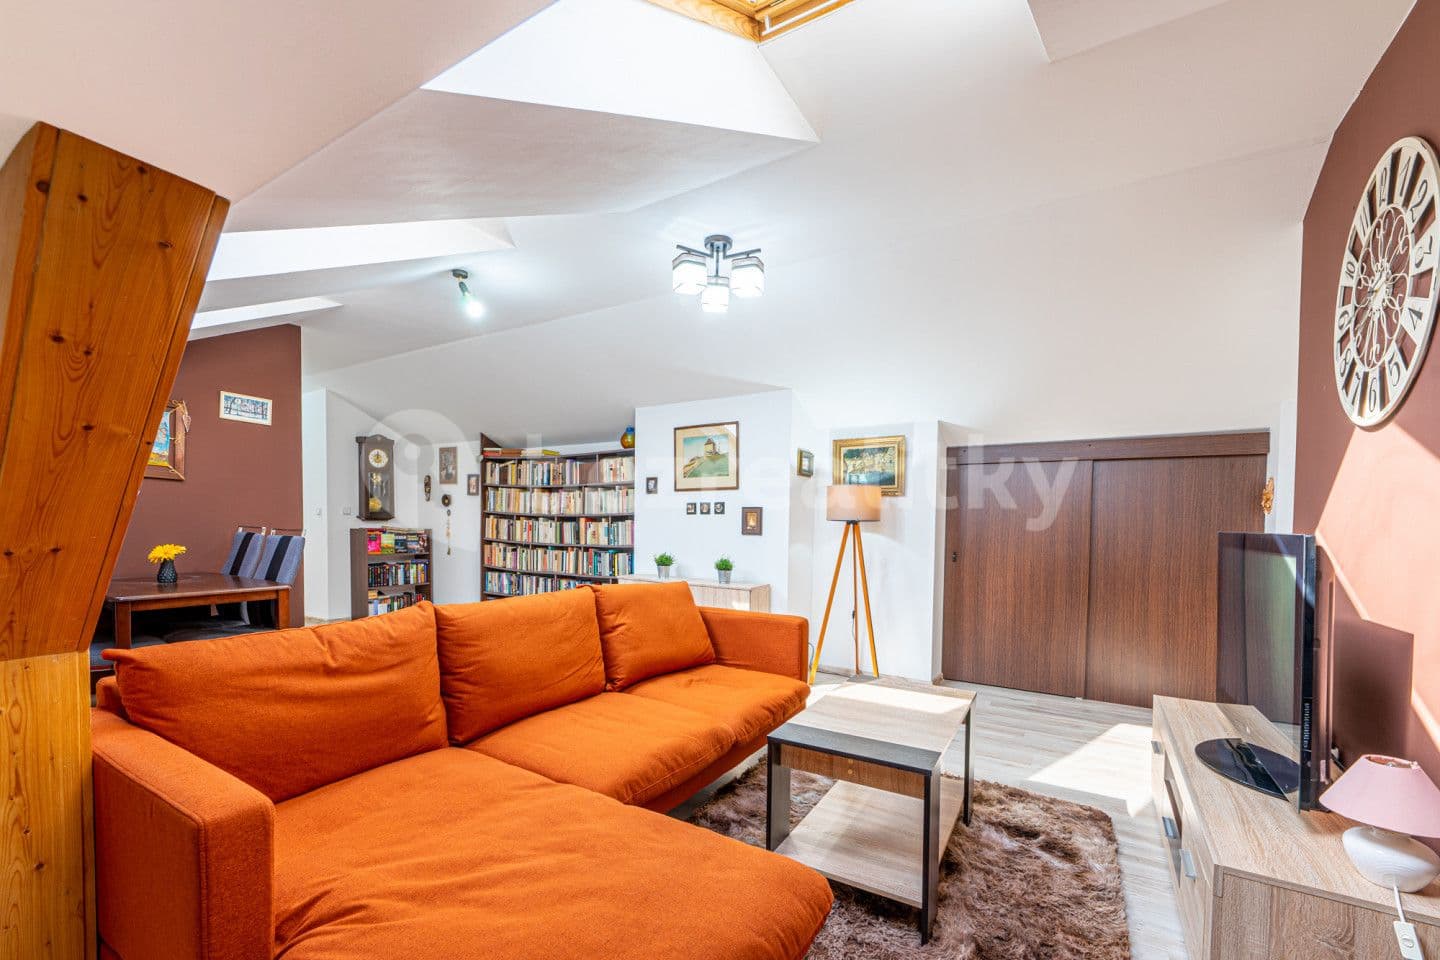 4 bedroom flat for sale, 121 m², Raisova, Karlovy Vary, Karlovarský Region